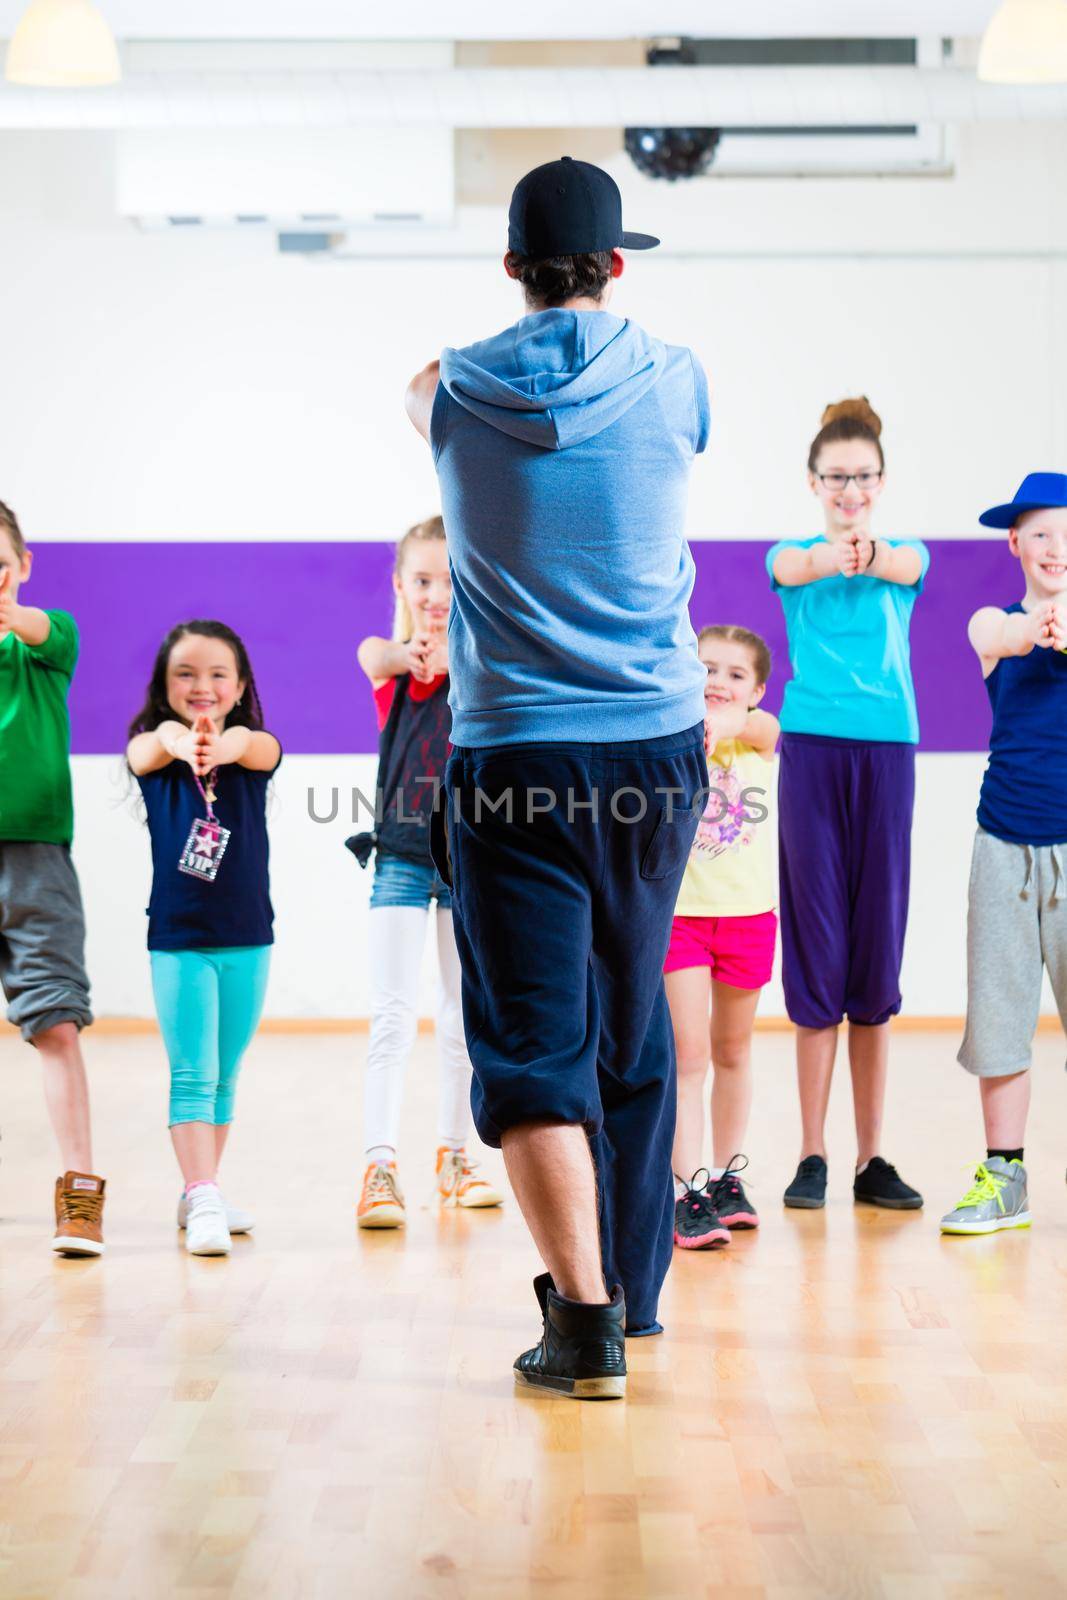 Dance teacher giving kids Zumba fitness class by Kzenon